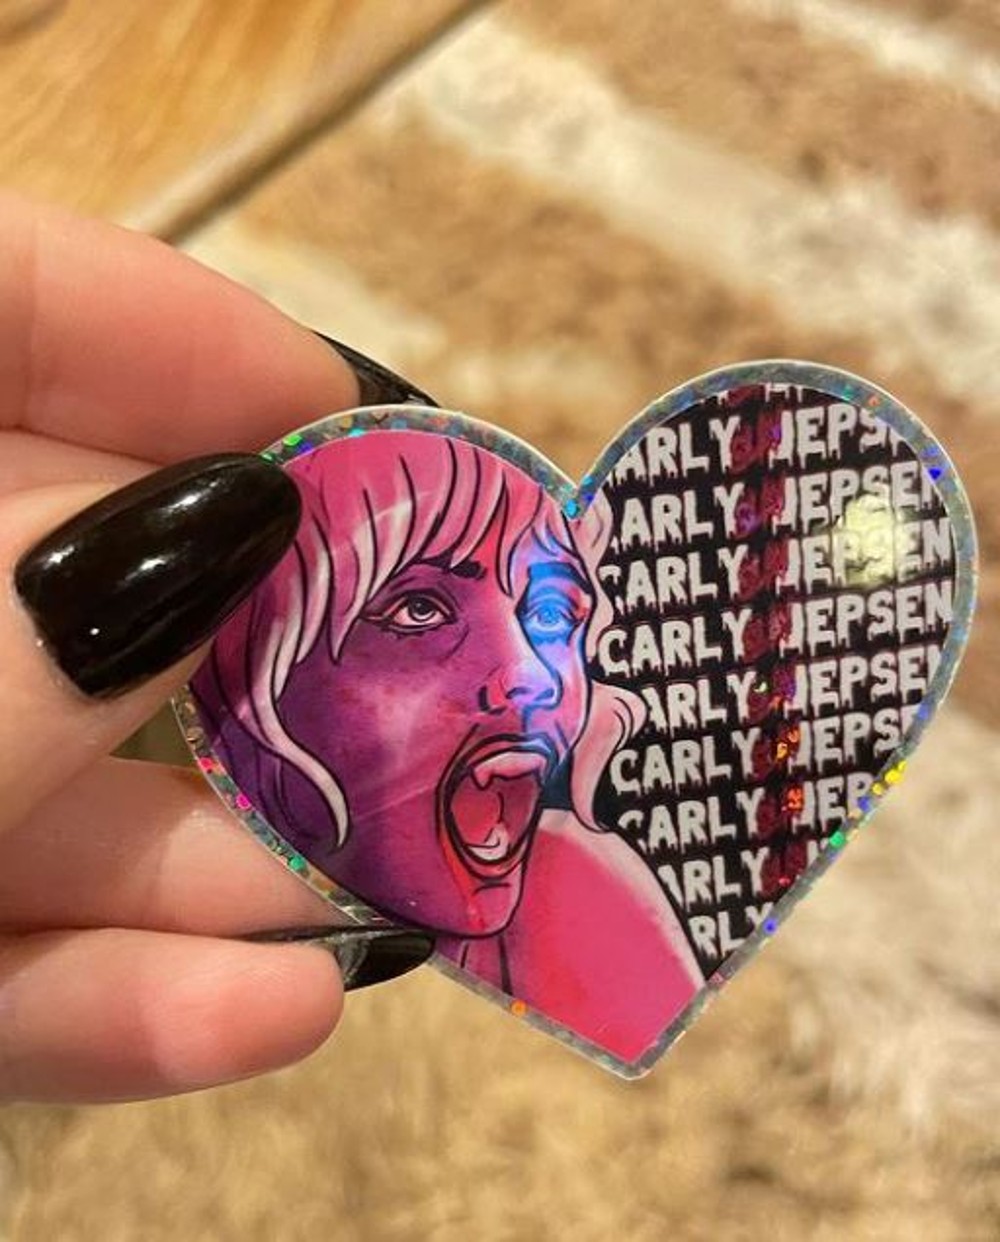 "Carly Slay Jepsen" heart sticker